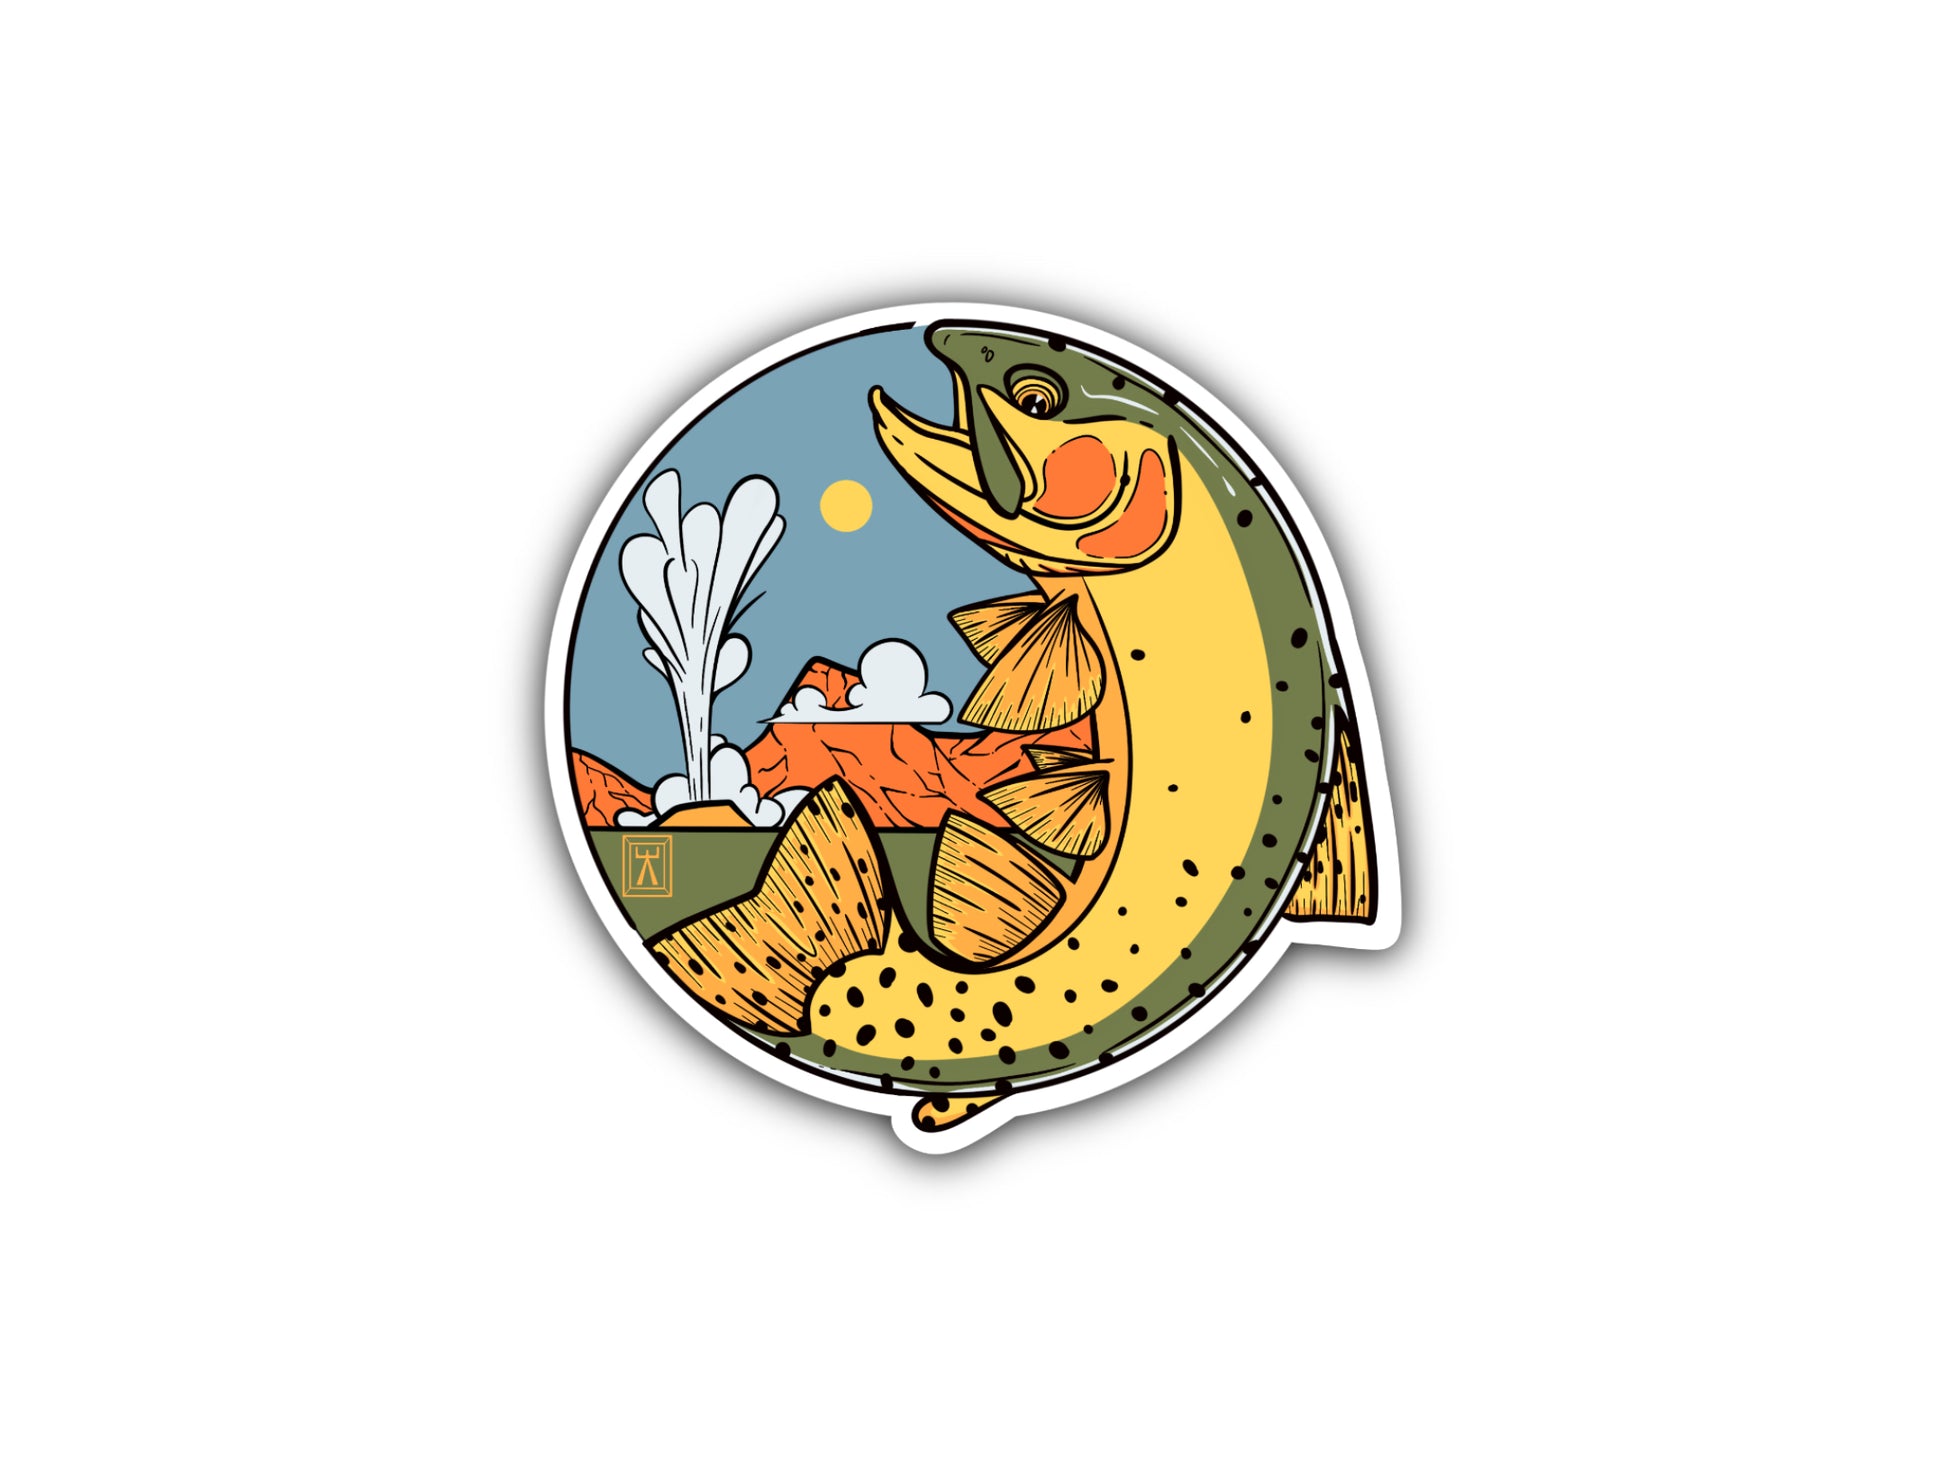 Sample of circular sticker featuring a cutthroat trout